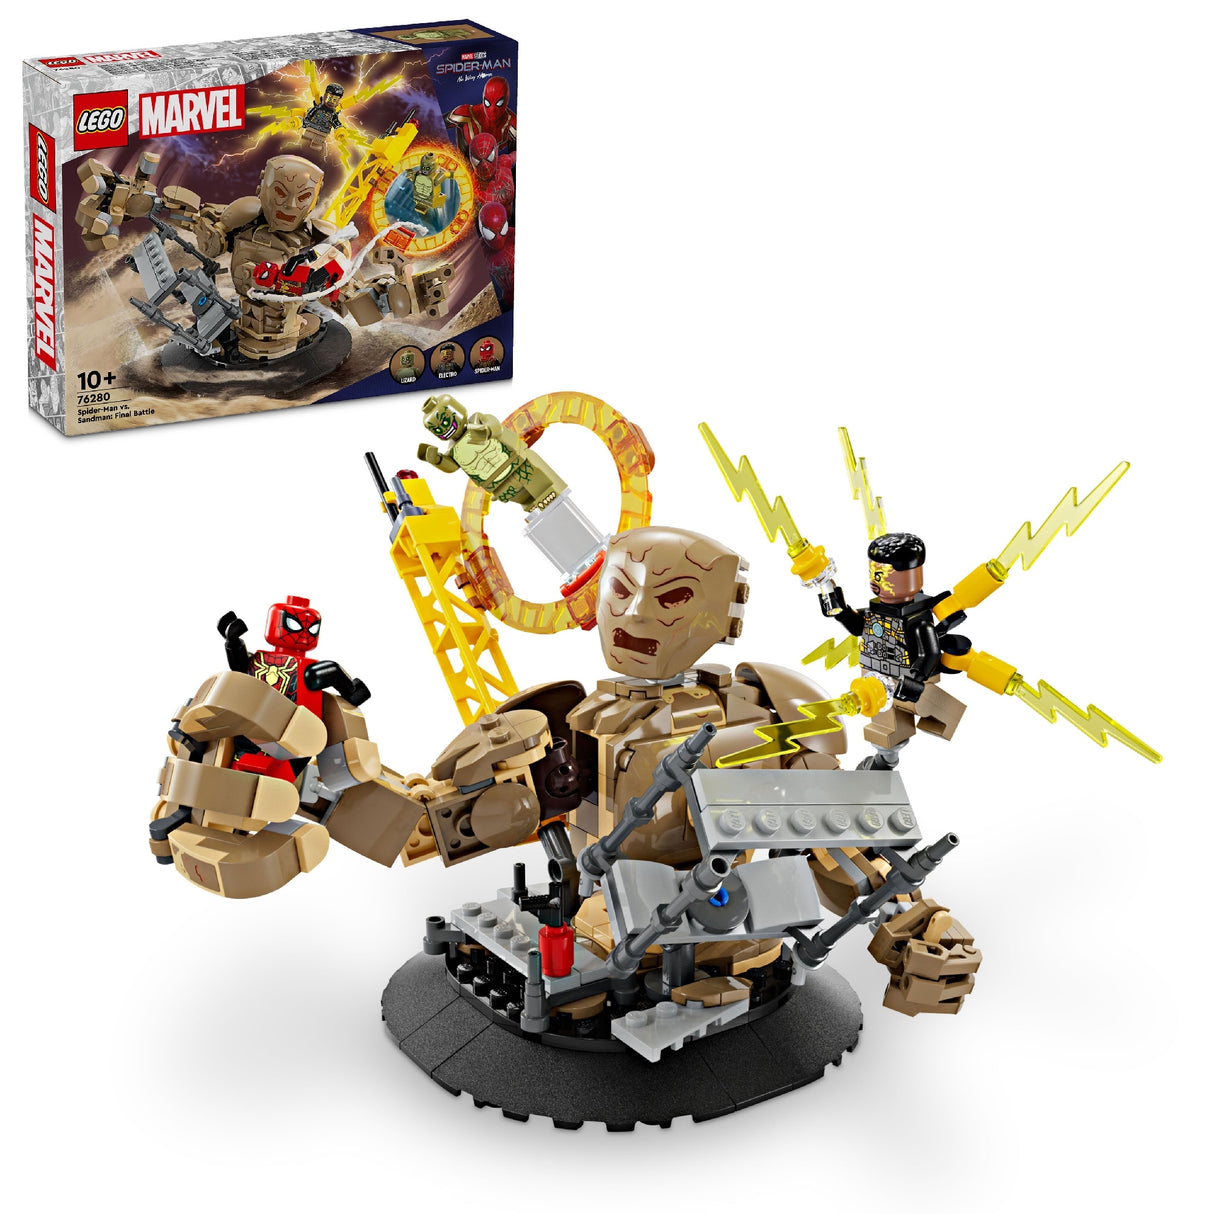 LEGO MARVEL SPIDER-MAN VS. SANDMAN: FINAL BATTLE 76280 AGE: 10+